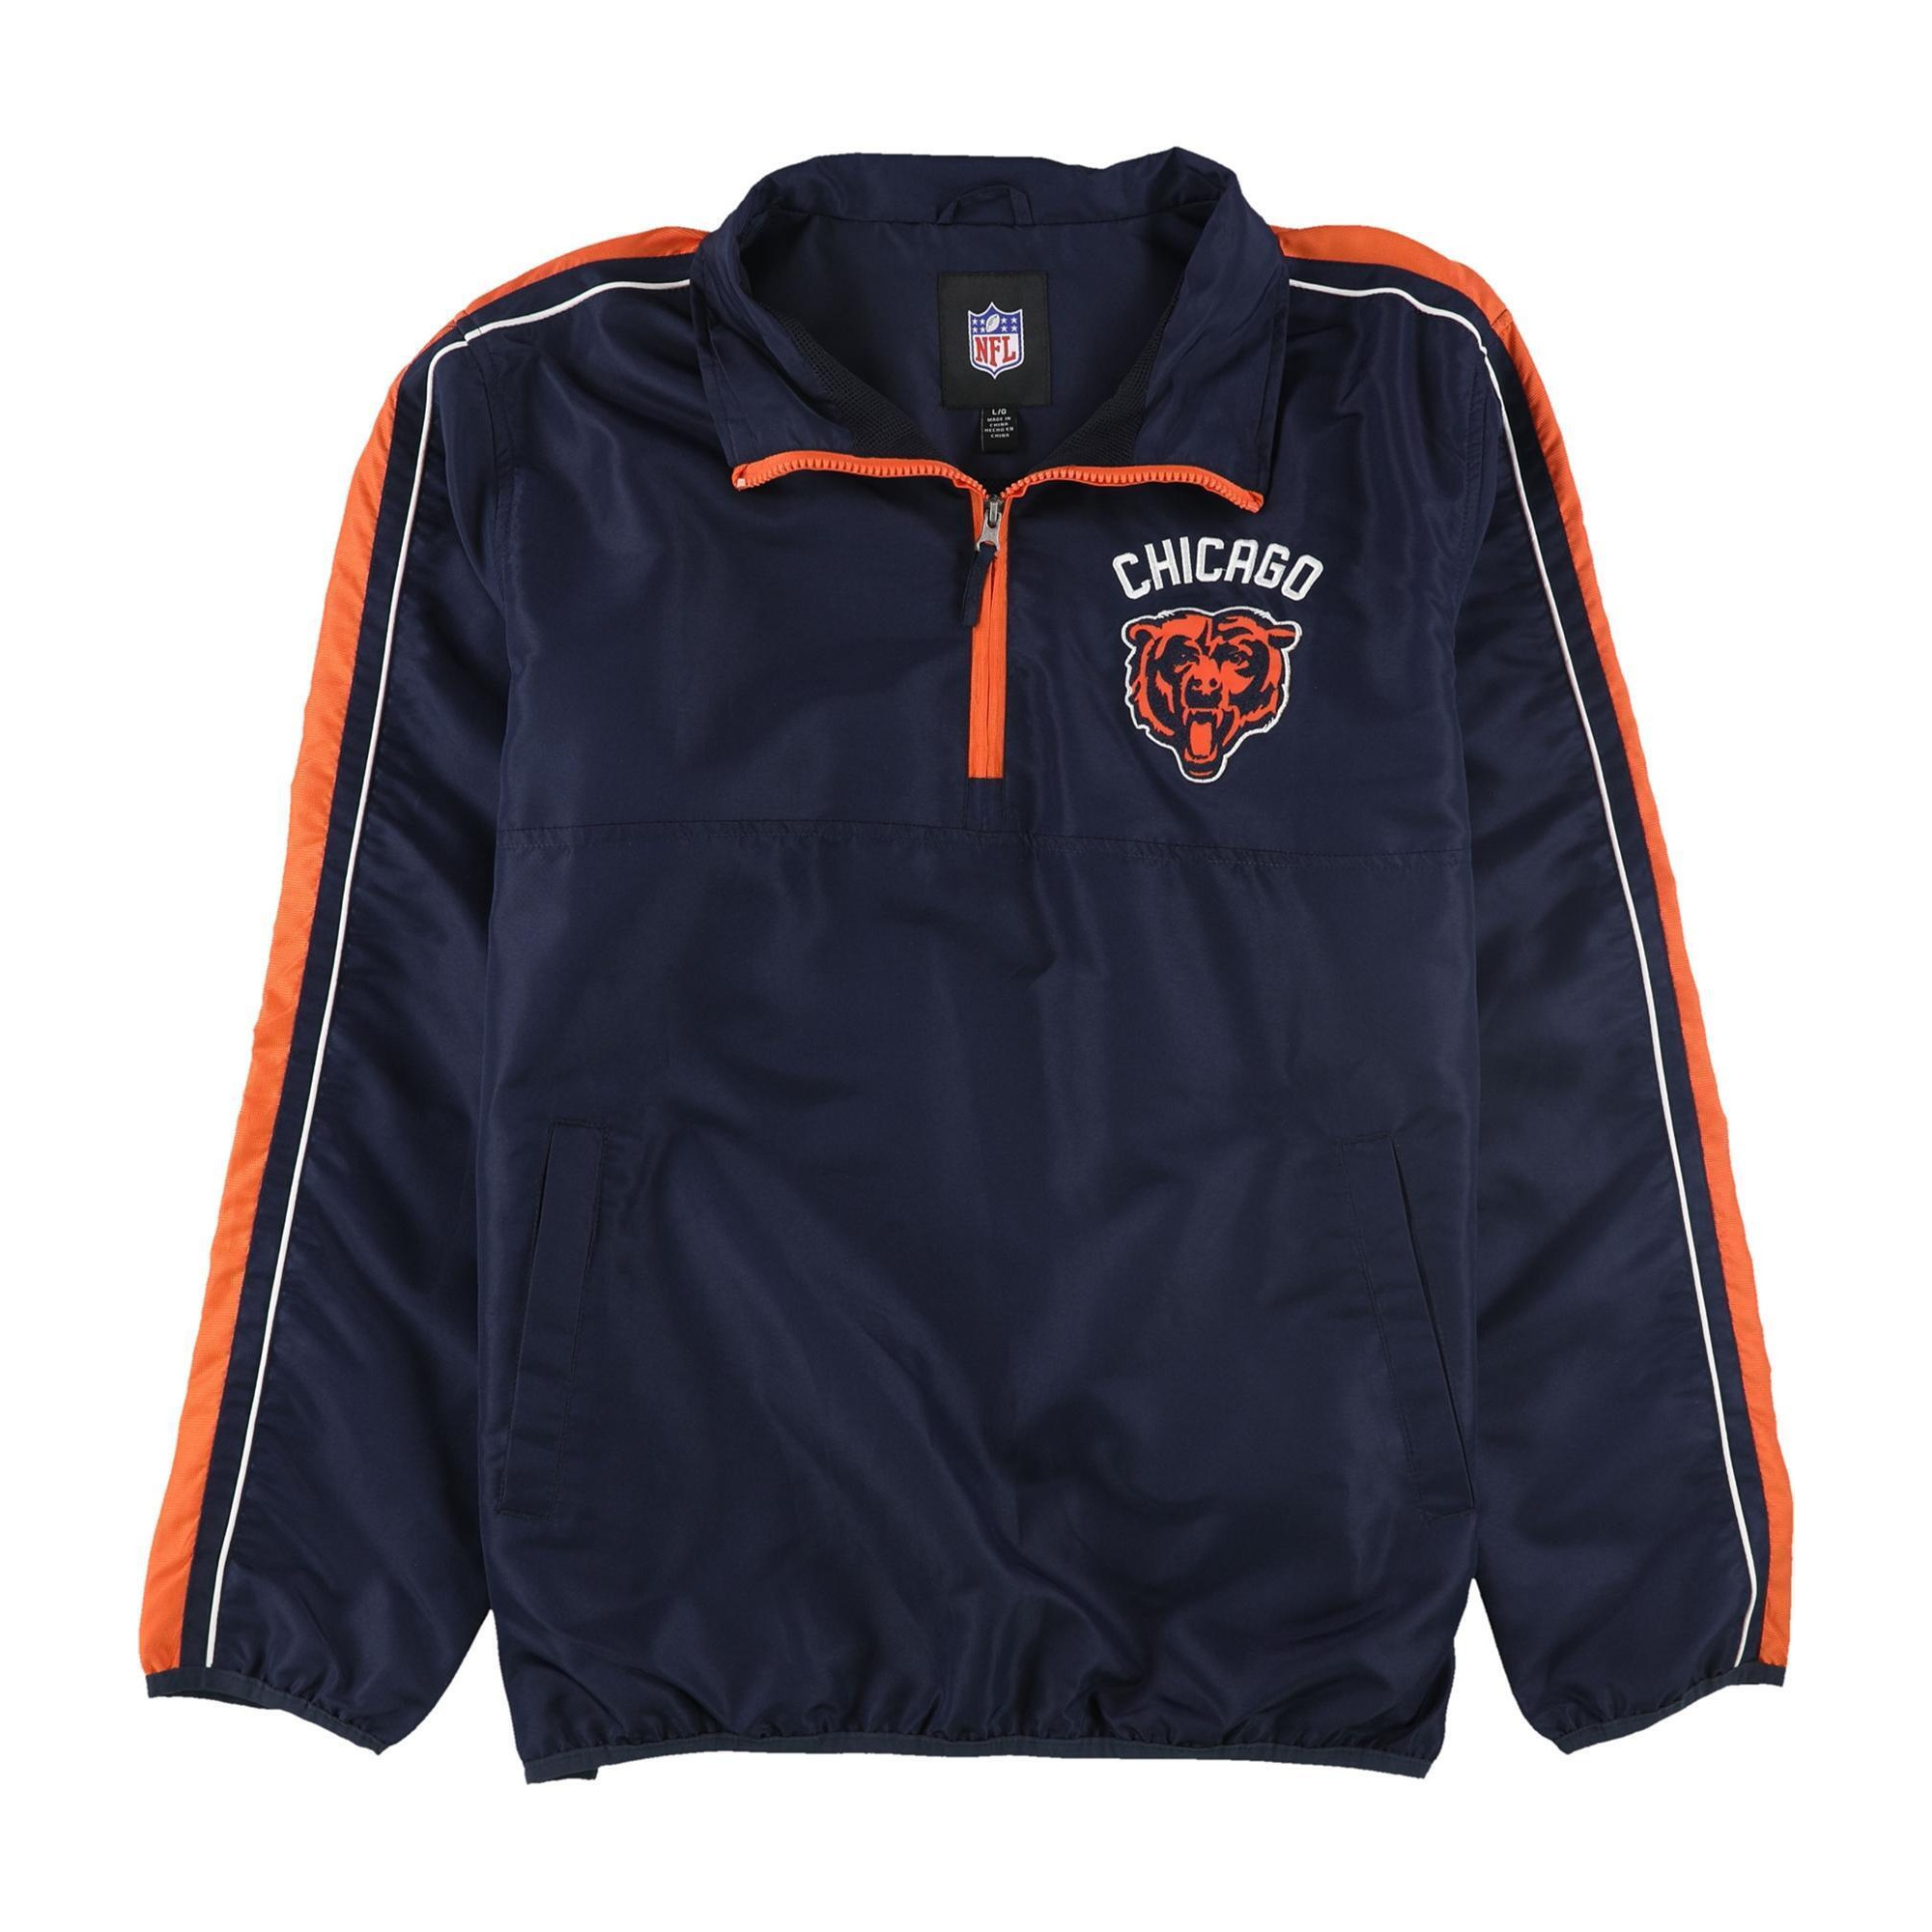 NFL Mens Chicago Bears Track Jacket Sweatshirt, Style # LA4-902-1 alternate image